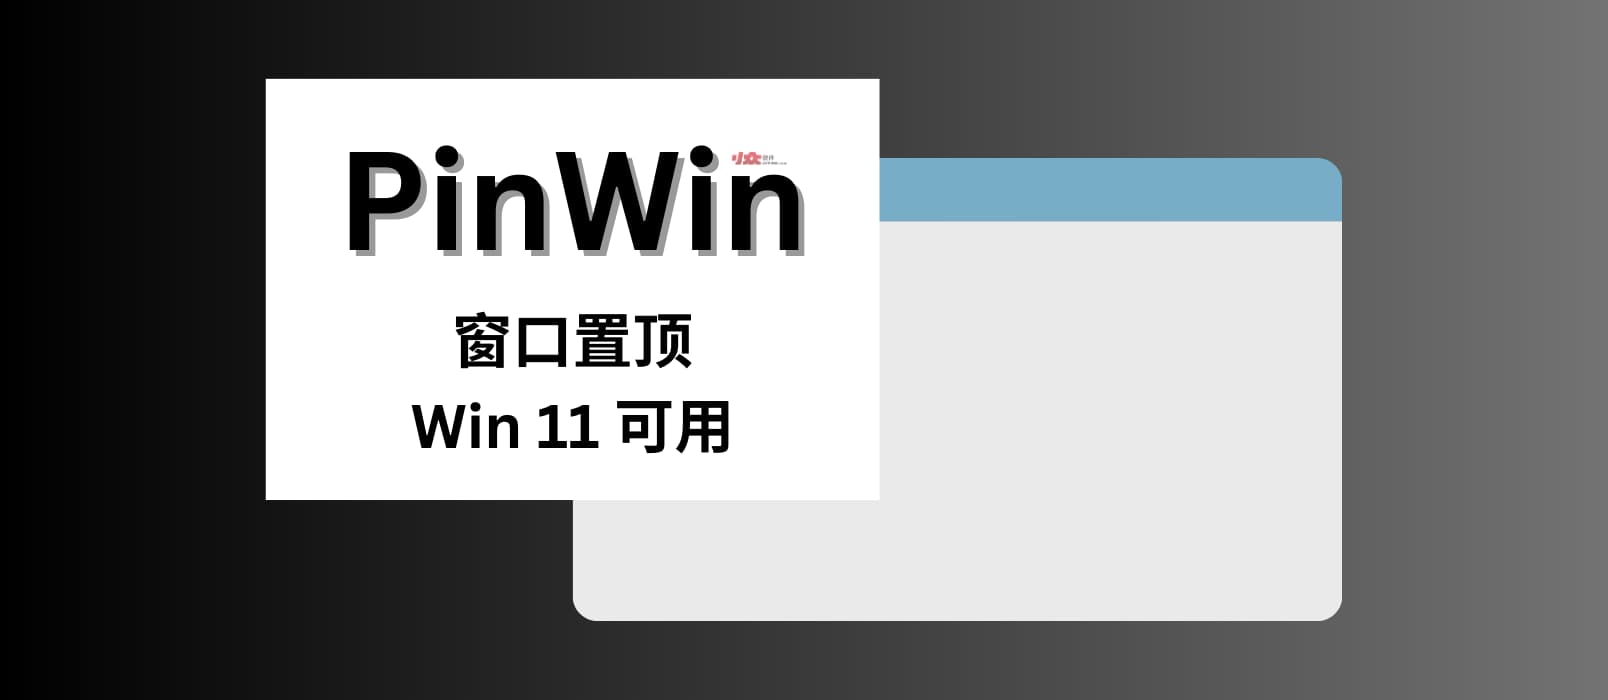 PinWin - Win 11 可用，置顶任何窗口